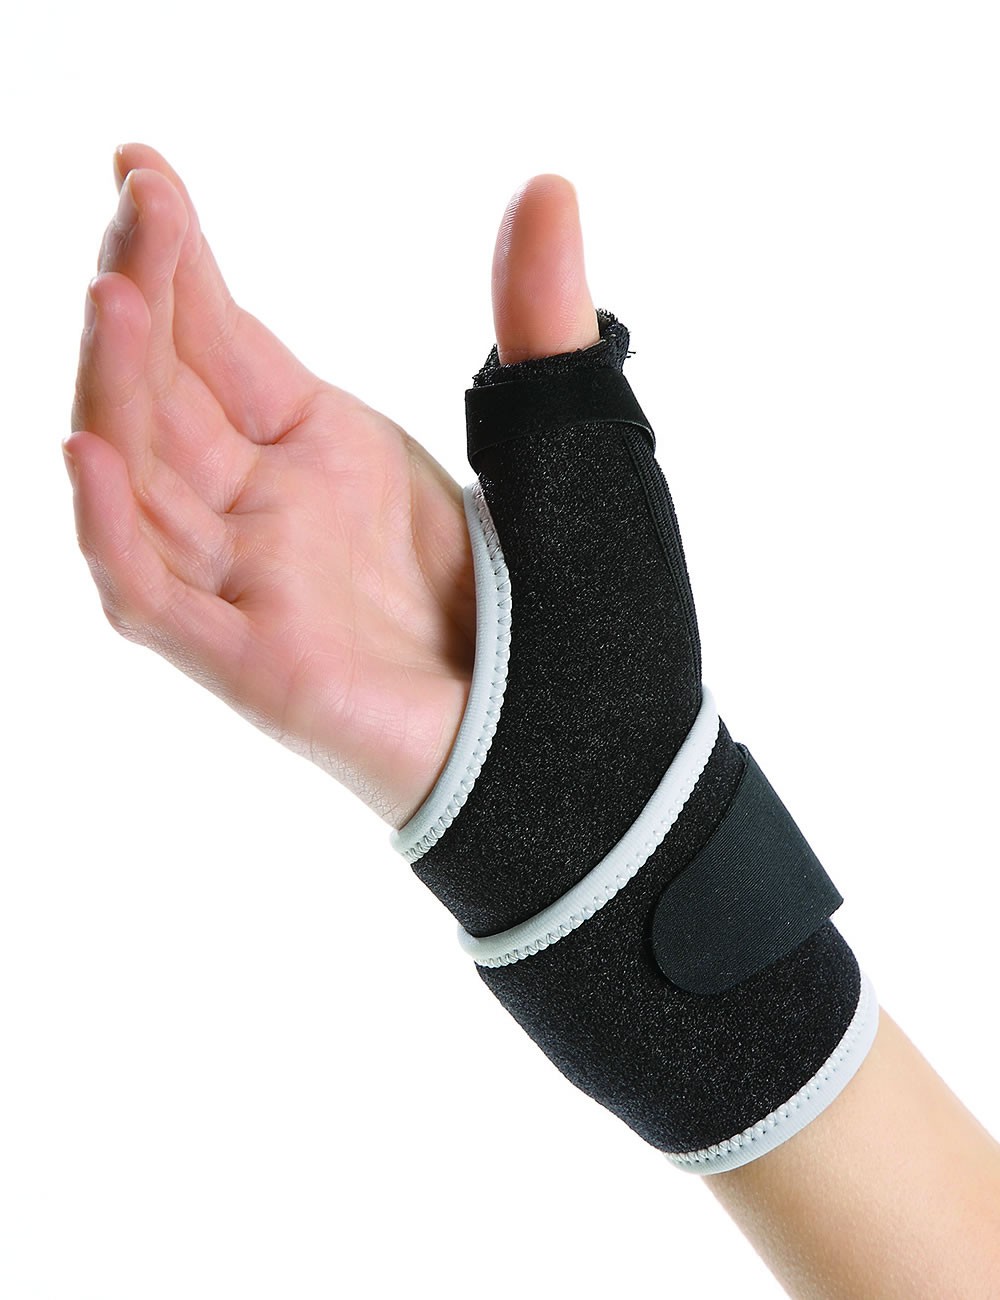 PK03 - Wrist brace with thumb hold